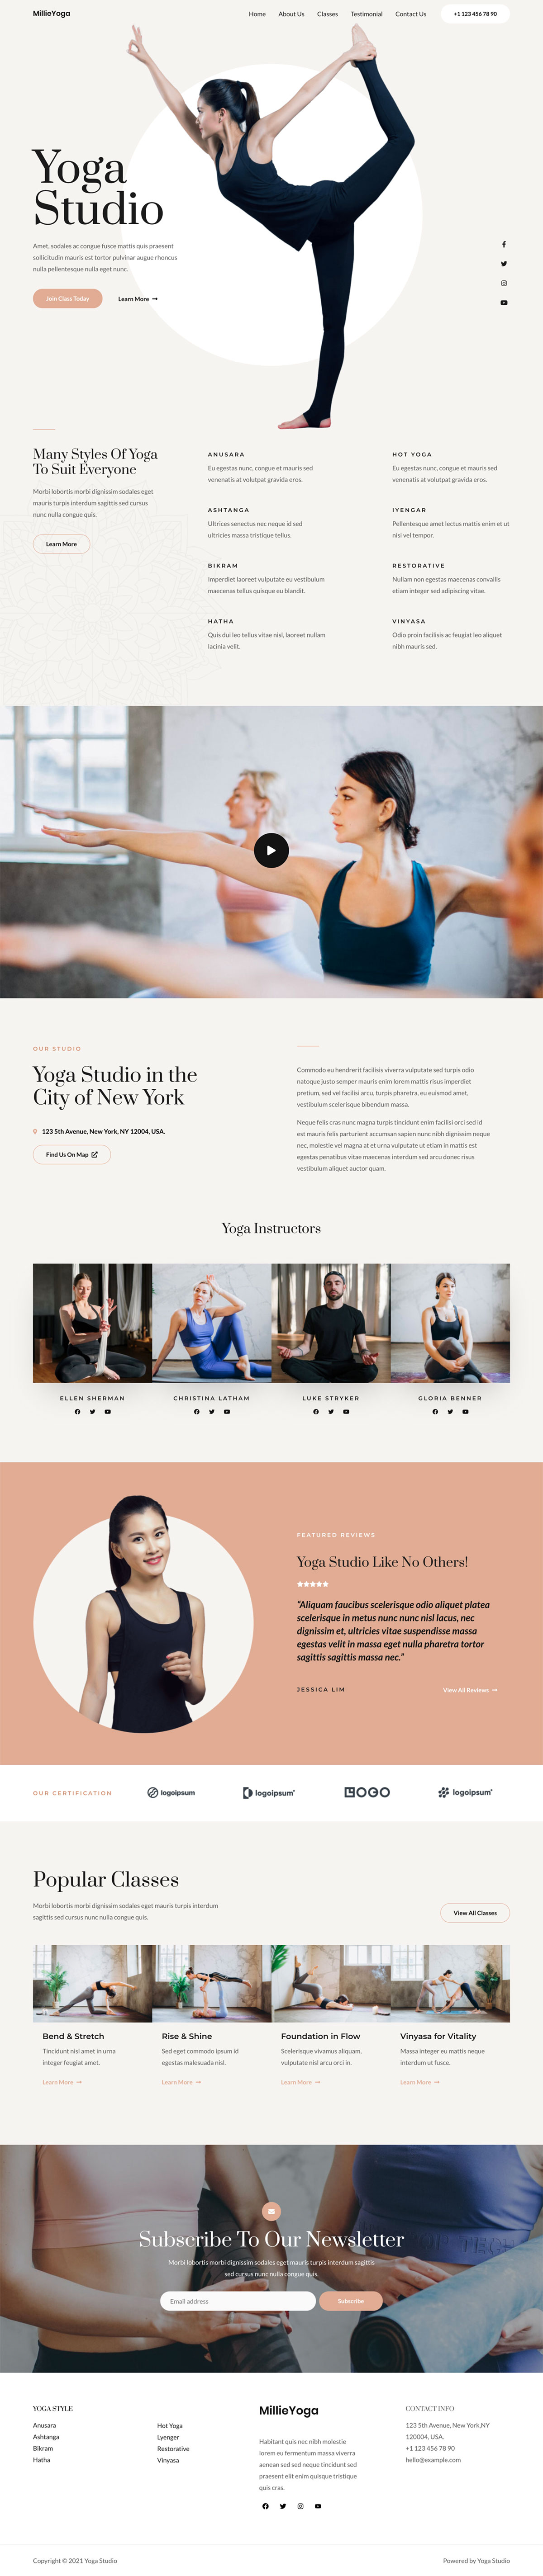 Web Design for Fitness, Wellness & Yoga Studios